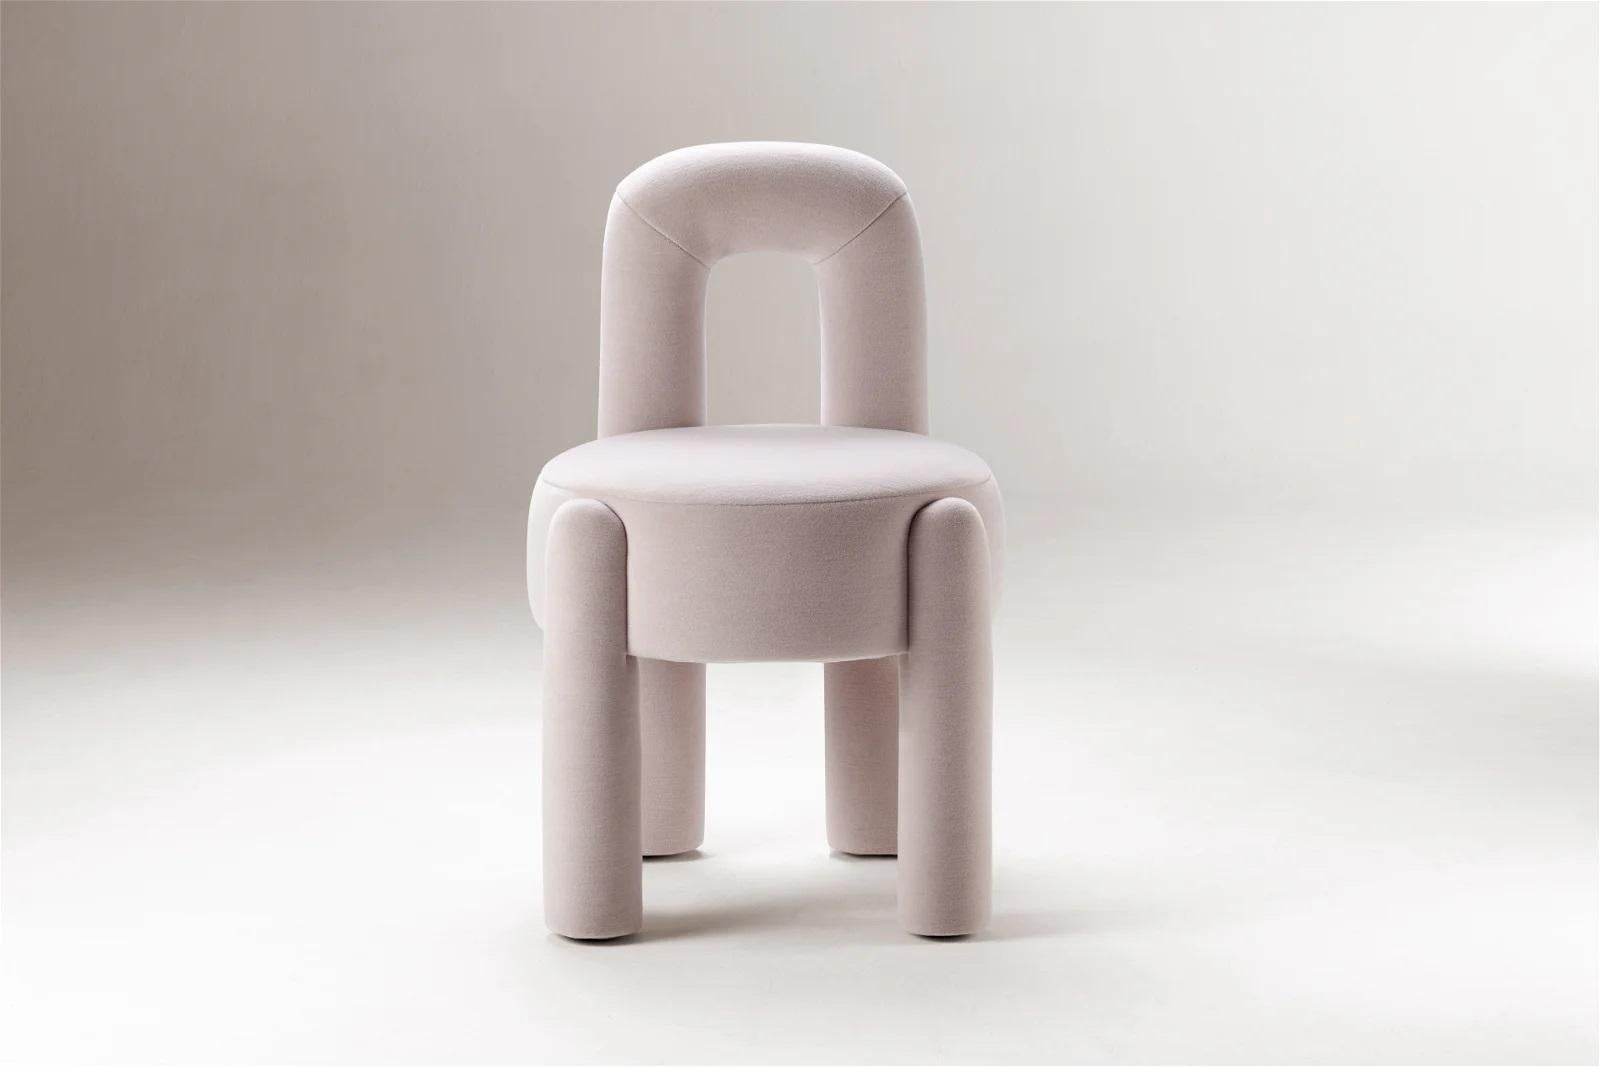 Portuguese DOOQ! Milan New! Organic Modern Marlon Chair, Light Kvadrat by P. Franceschini For Sale